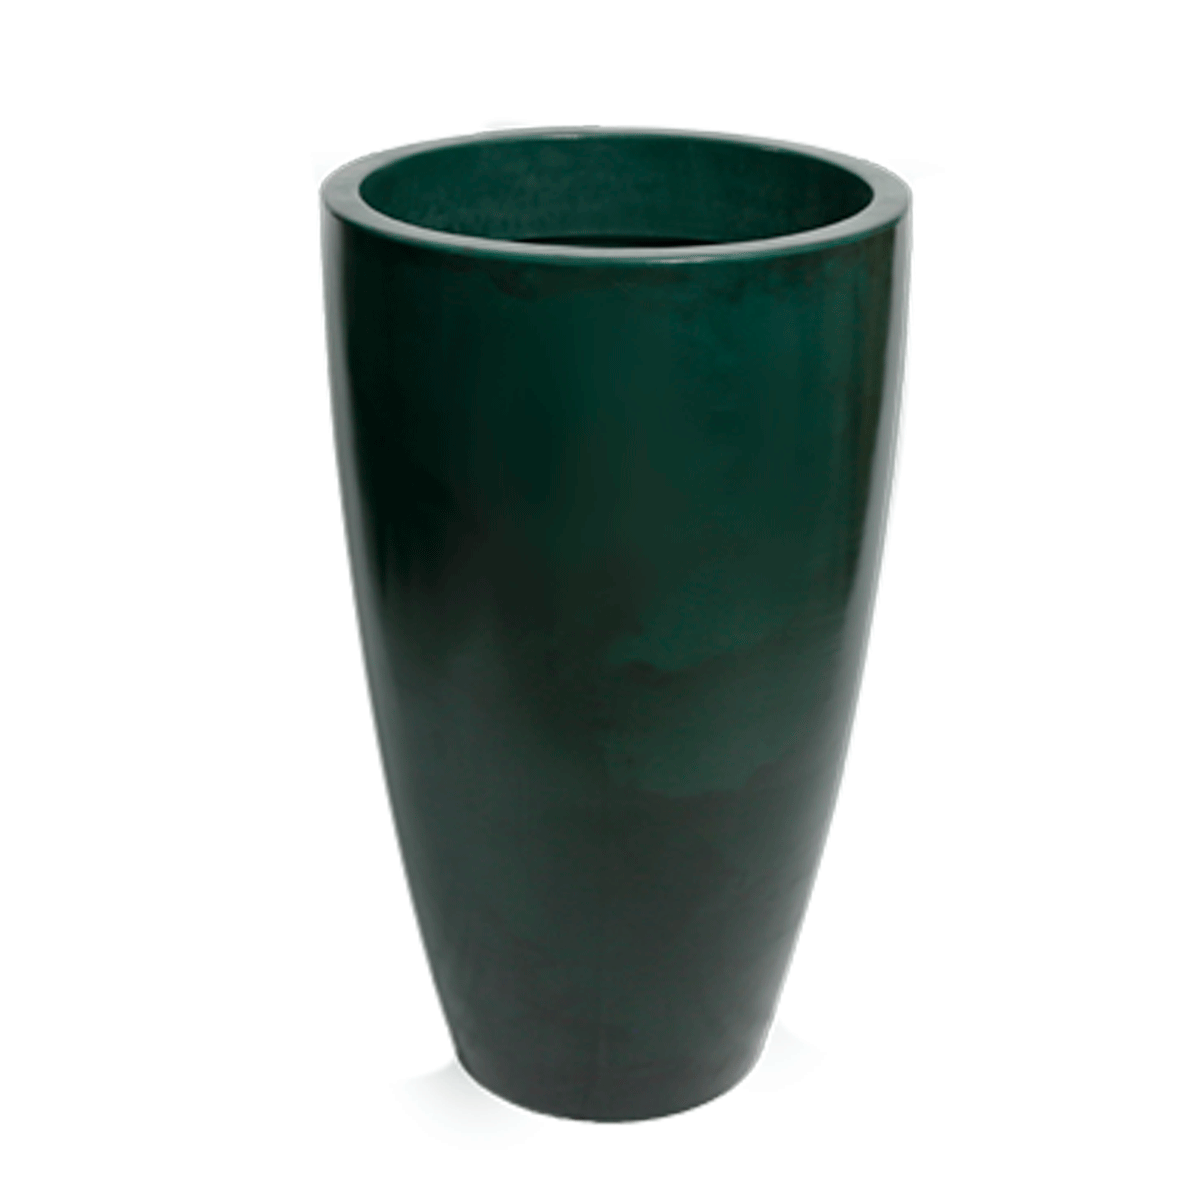 Vaso de Polietileno Redondo ALTO VERONA tam 30 x 53 cm Vasart cor Antique  Verde